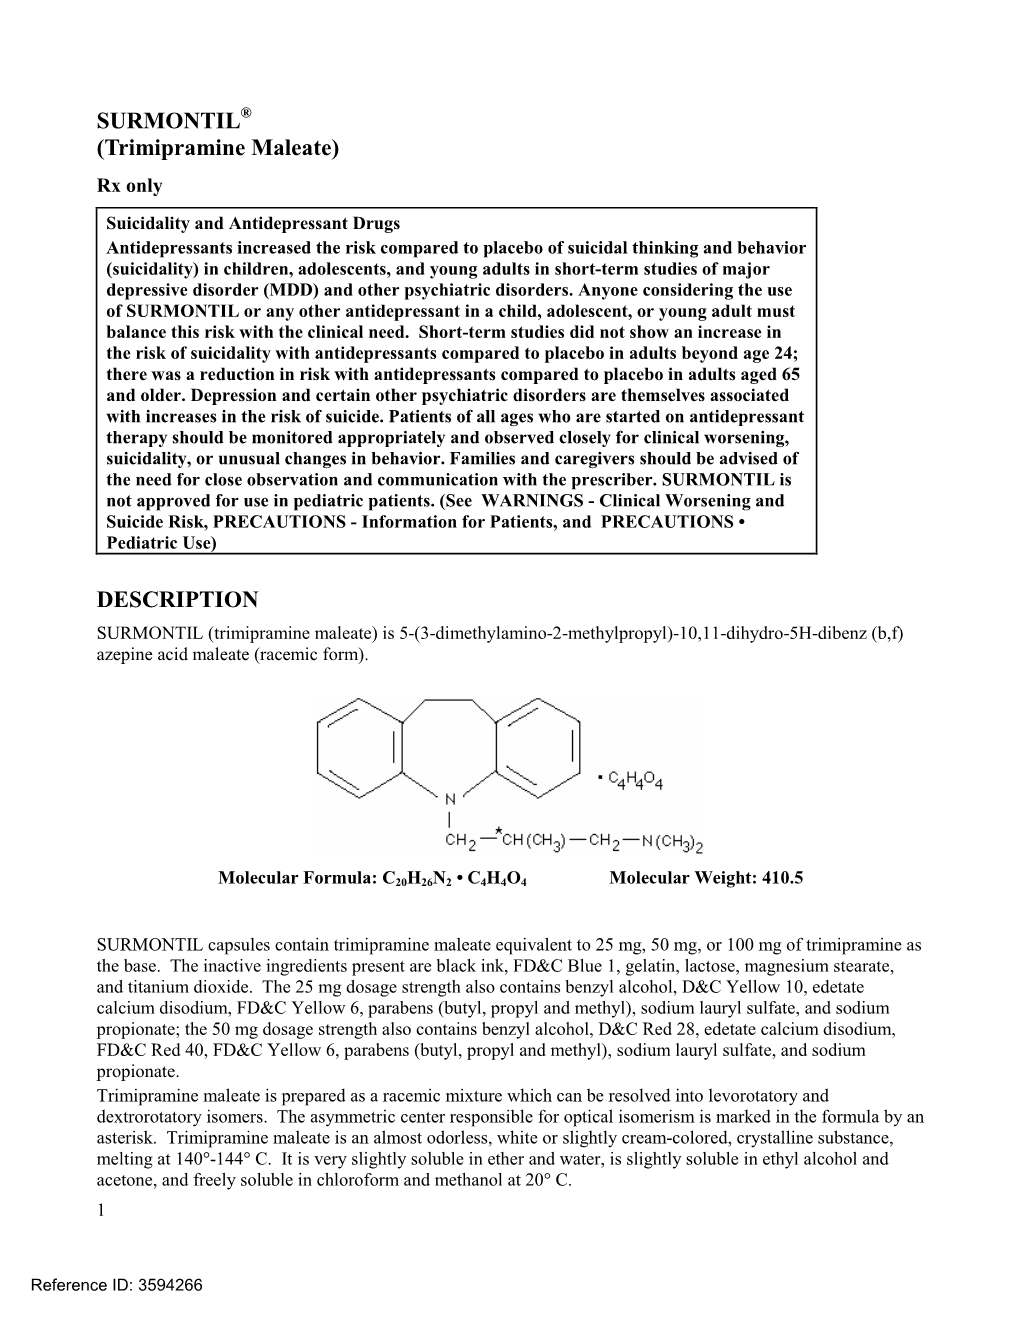 SURMONTIL (Trimipramine Maleate) Is 5-(3-Dimethylamino-2-Methylpropyl)-10,11-Dihydro-5H-Dibenz (B,F) Azepine Acid Maleate (Racemic Form)